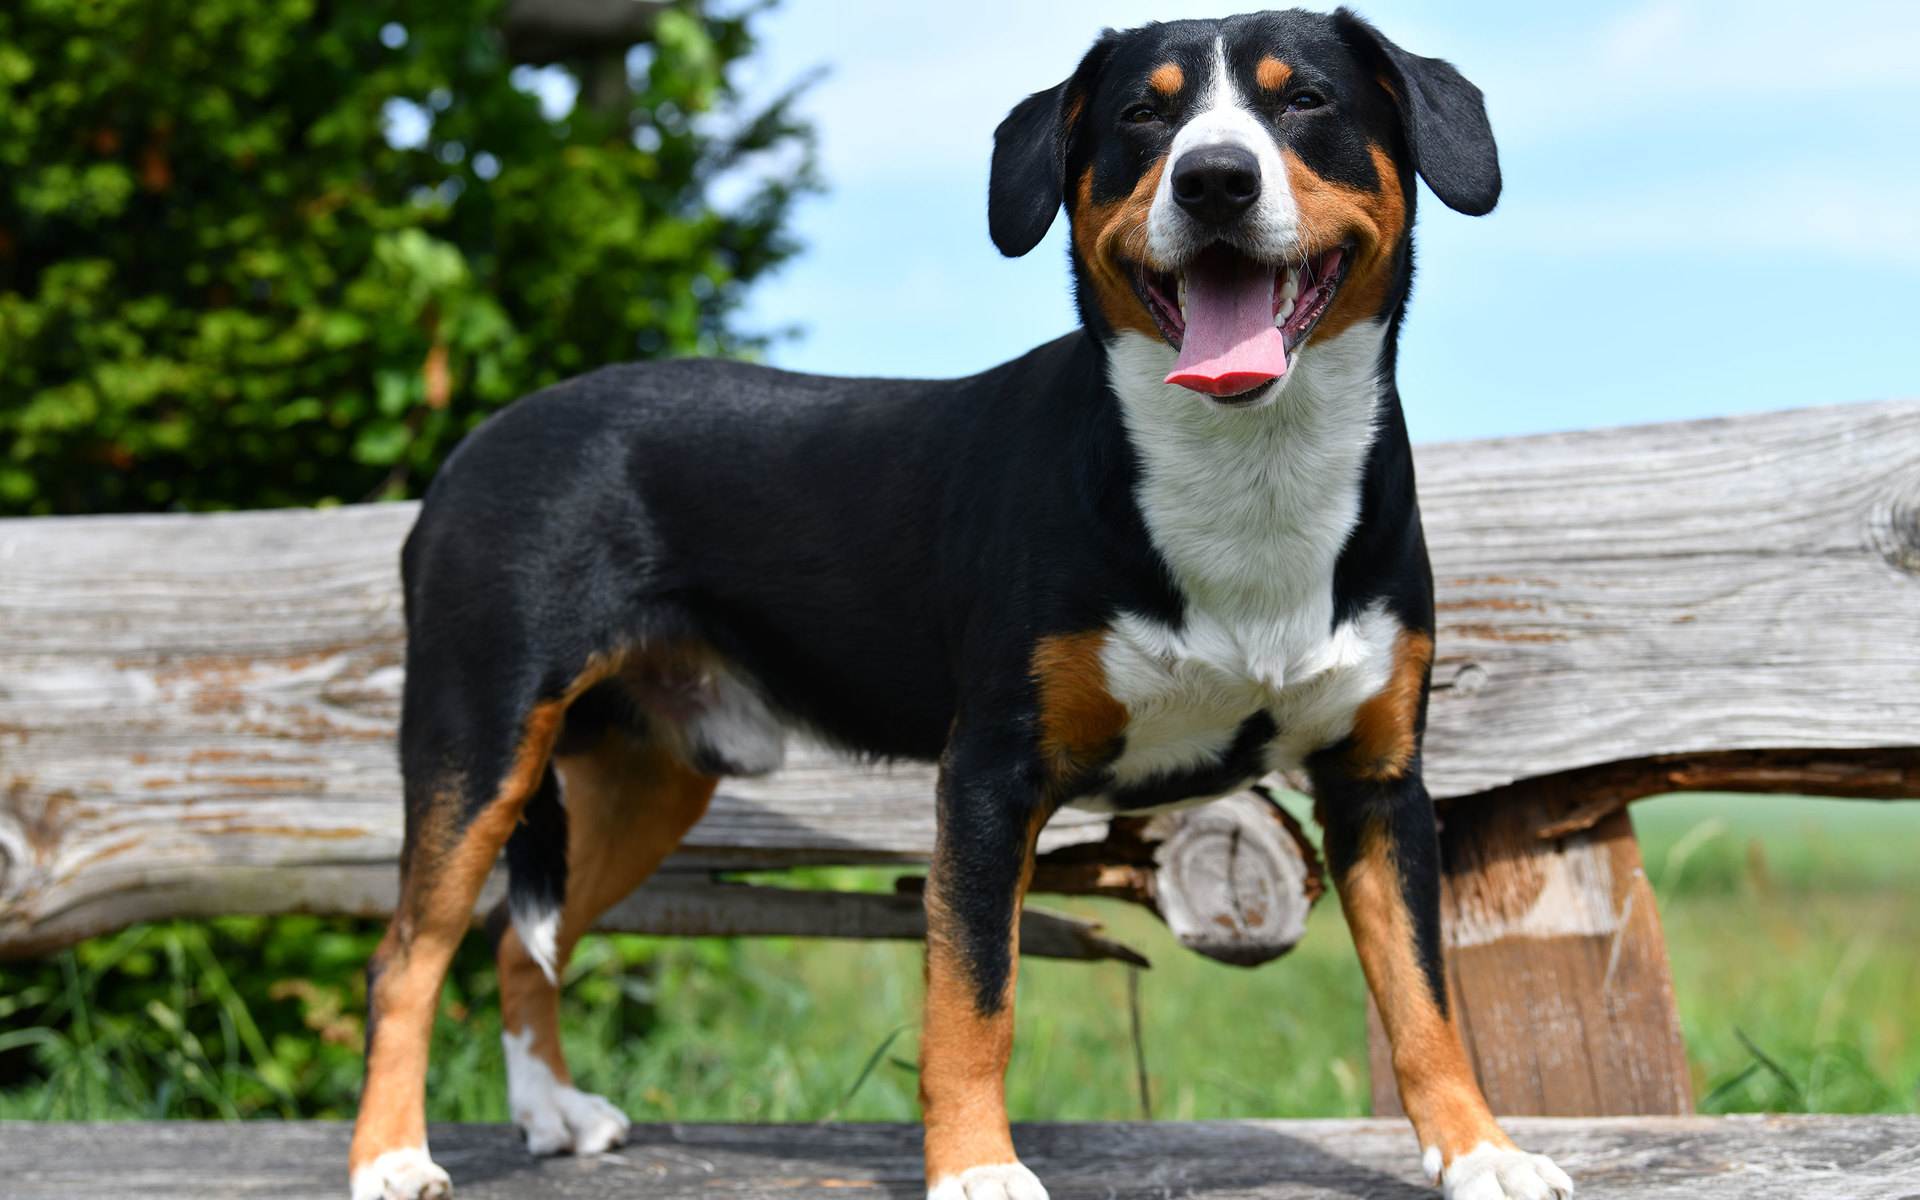 Аппенцеллер зенненхунд (аппенцельская горная собака) - фото, характер, описание породы